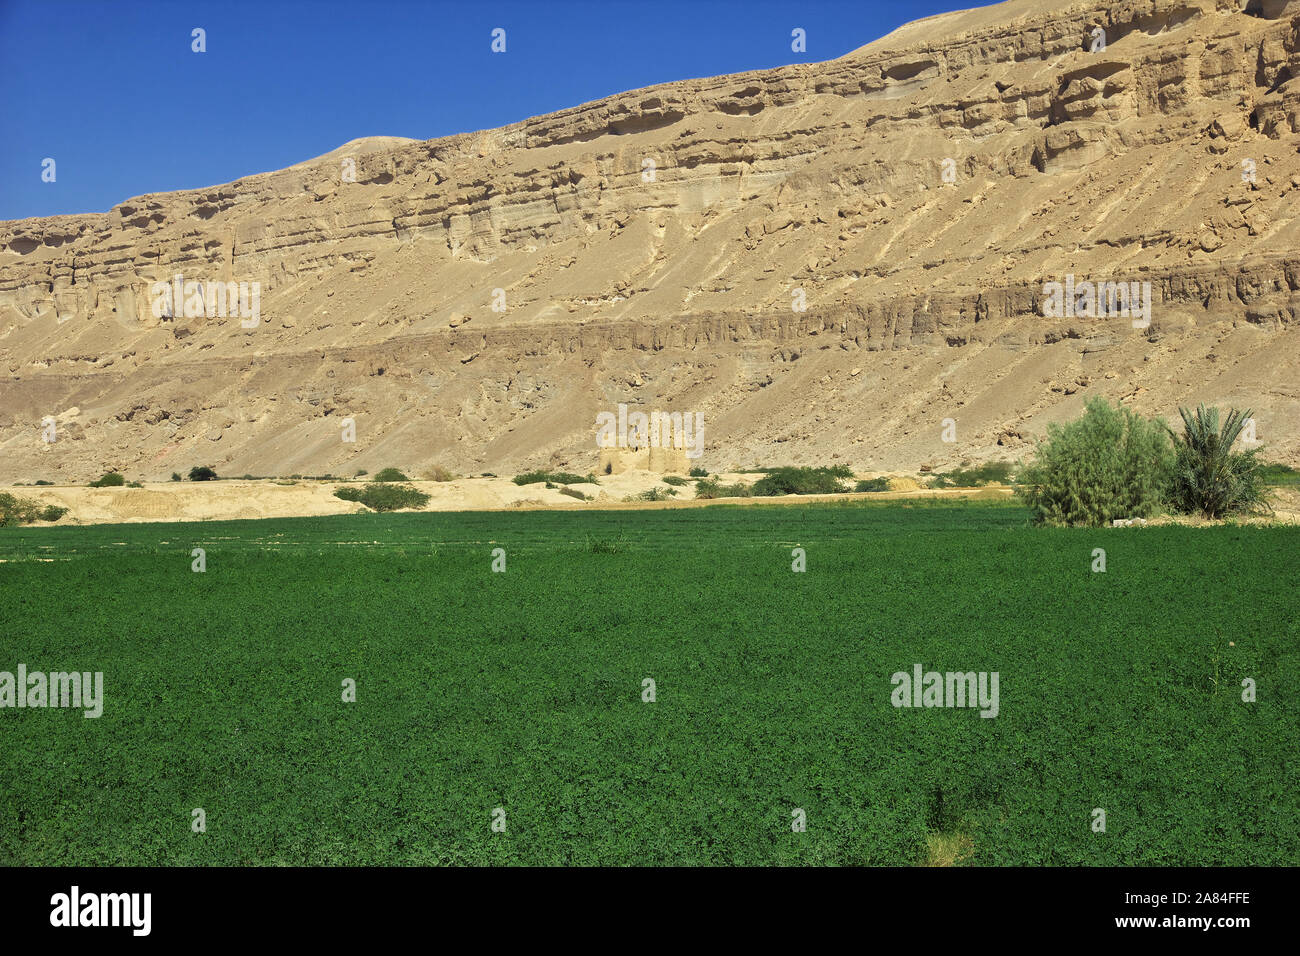 The fortress in mountains in Wadi Hadhramaut, Yemen Stock Photo